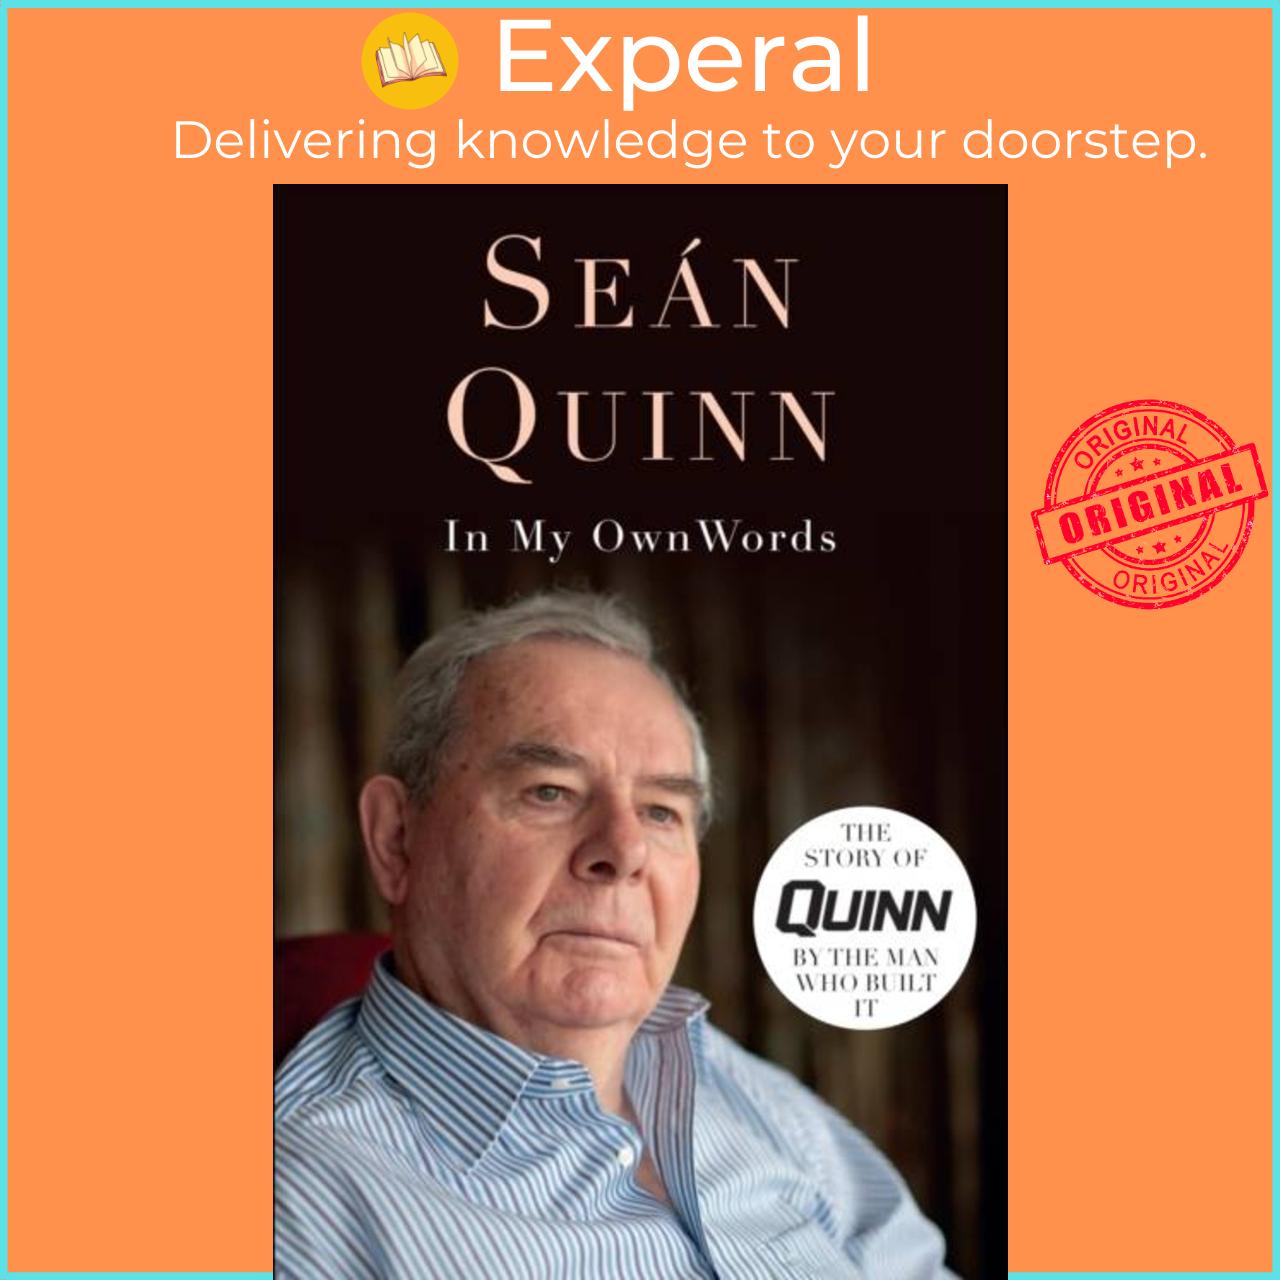 Sách - Sean Quinn - In My Own Words by Sean Quinn (UK edition, paperback)